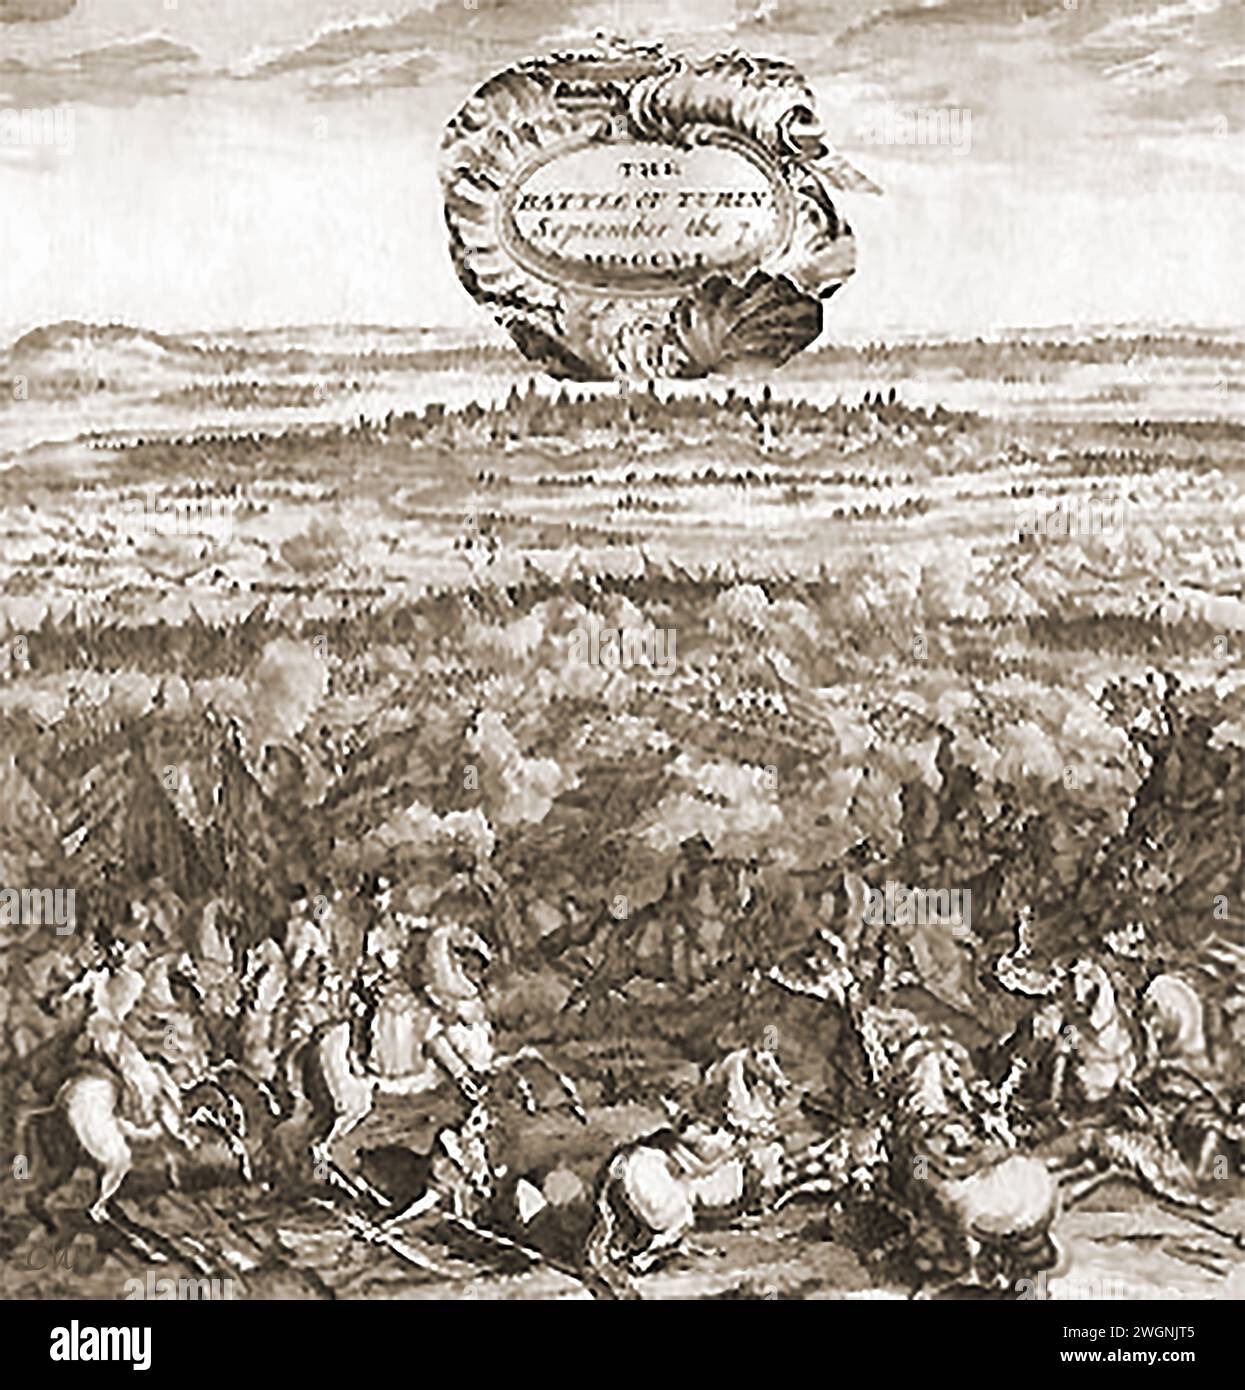 Gravure du début du XVIIIe siècle montrant la bataille de Turin - Una delle prime incisioni secolo - mostra la battaglia di Torino del XVIII Banque D'Images